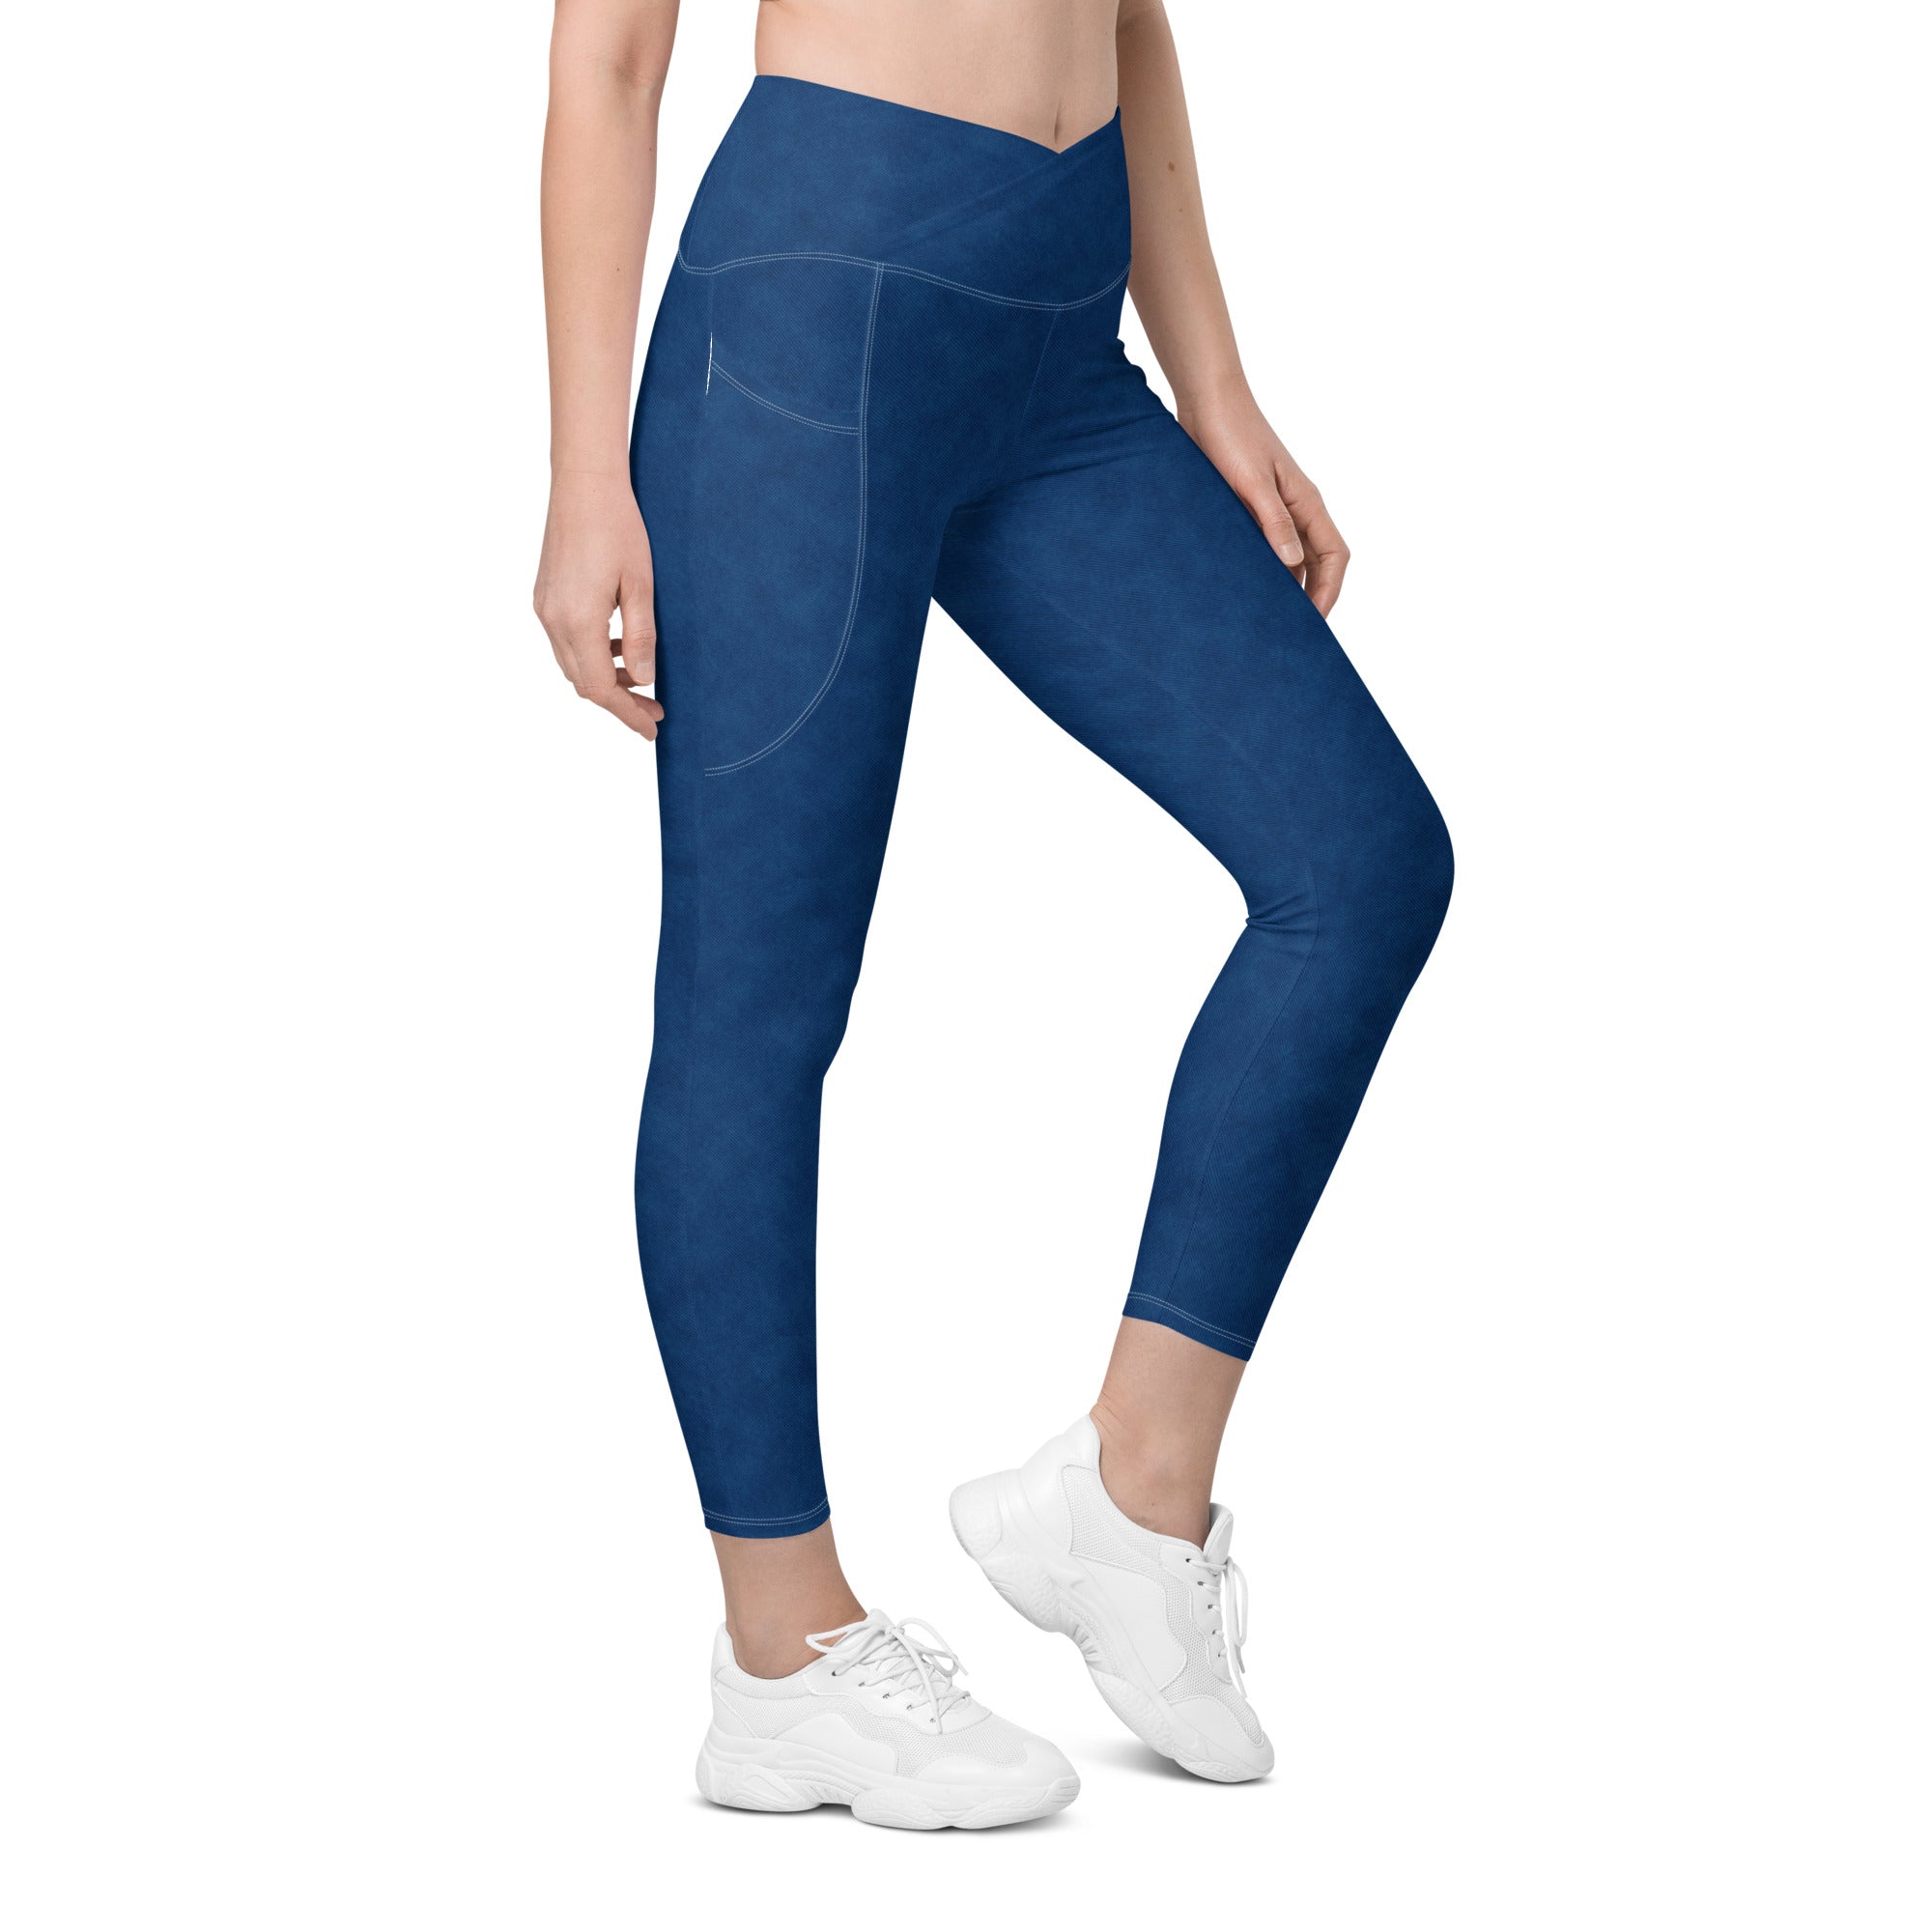 Crossover leggings with pockets- Denim Print Blue